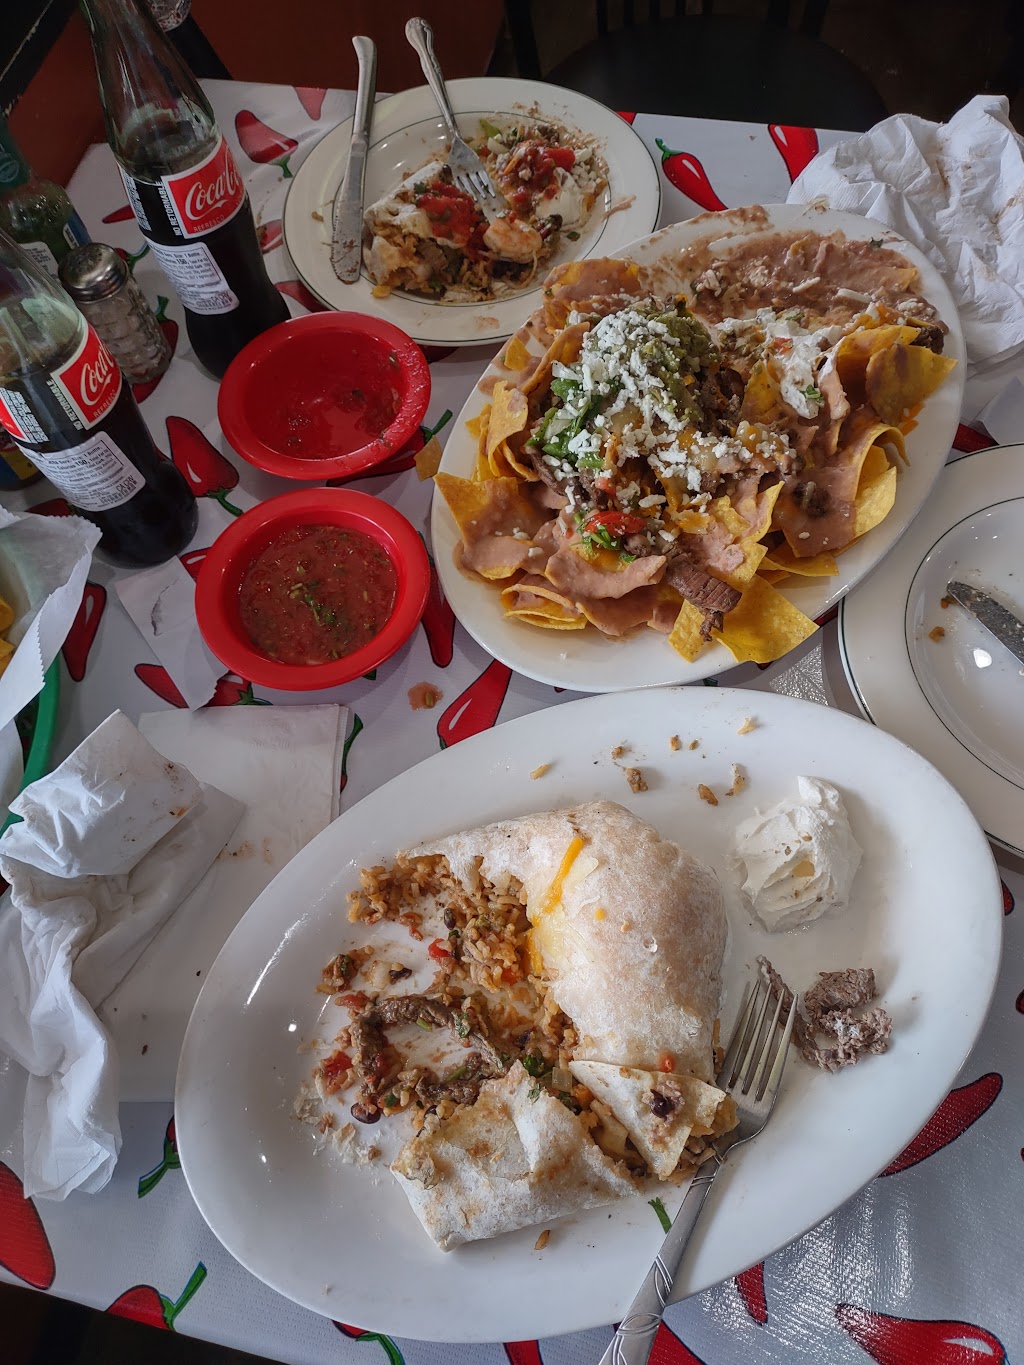 El Tepeyac Mexican restaurant | 511 NJ-72, Manahawkin, NJ 08050 | Phone: (609) 549-5511